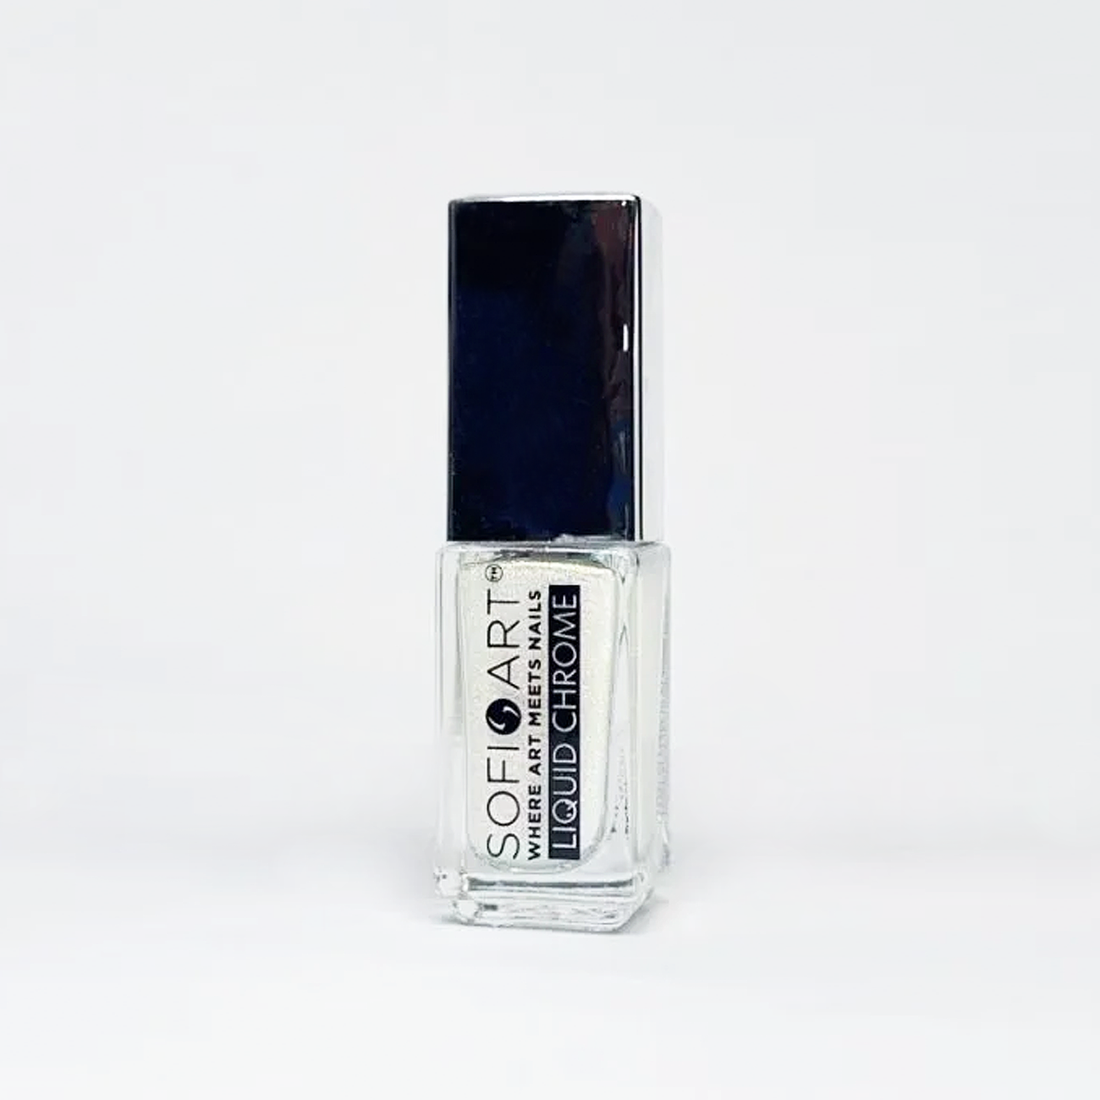 Sofi-Art Nail Liquid Chrome High Brilliance Stunning Powder Finish Manicure